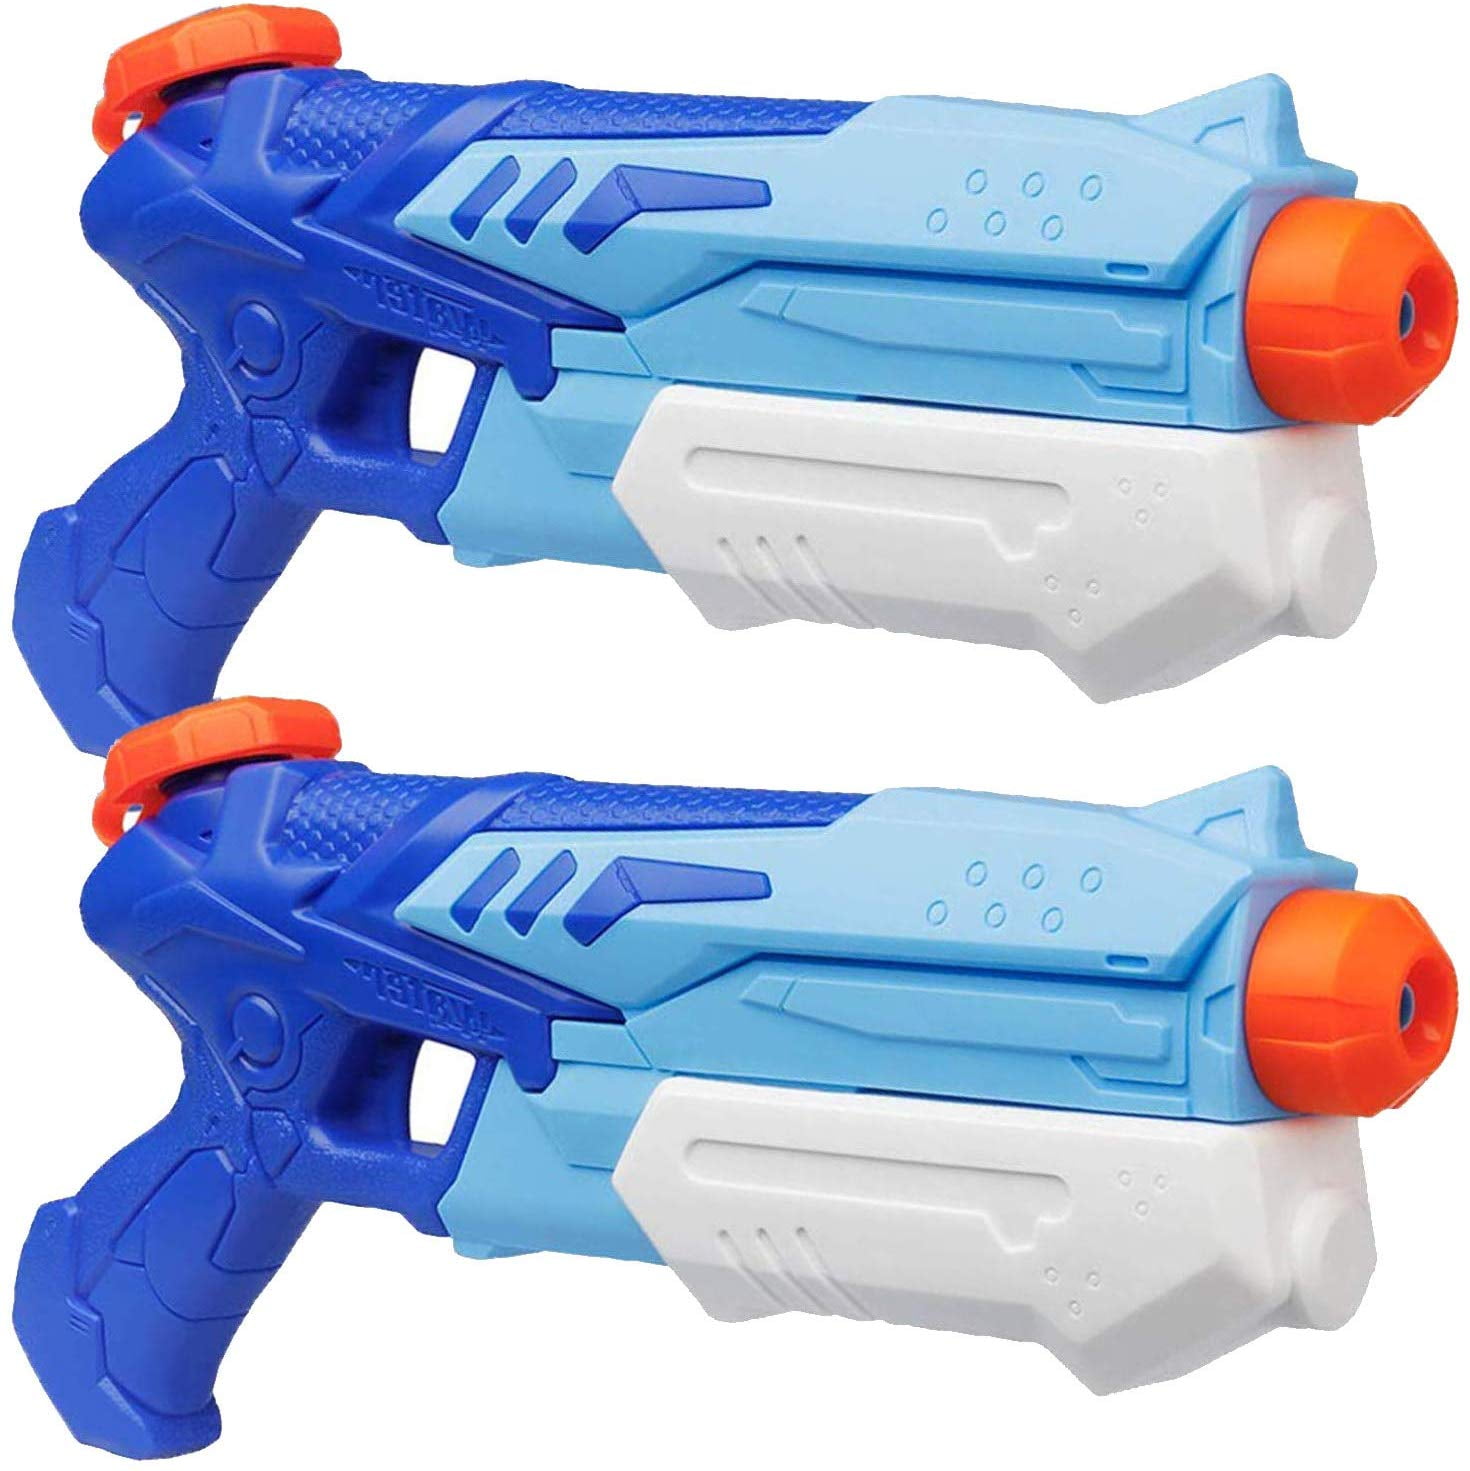 Water Gun 2 P2 PK 2021 Super Soaker Kids Summer Squirt Blaster Swimming Pool Toy for sale online 